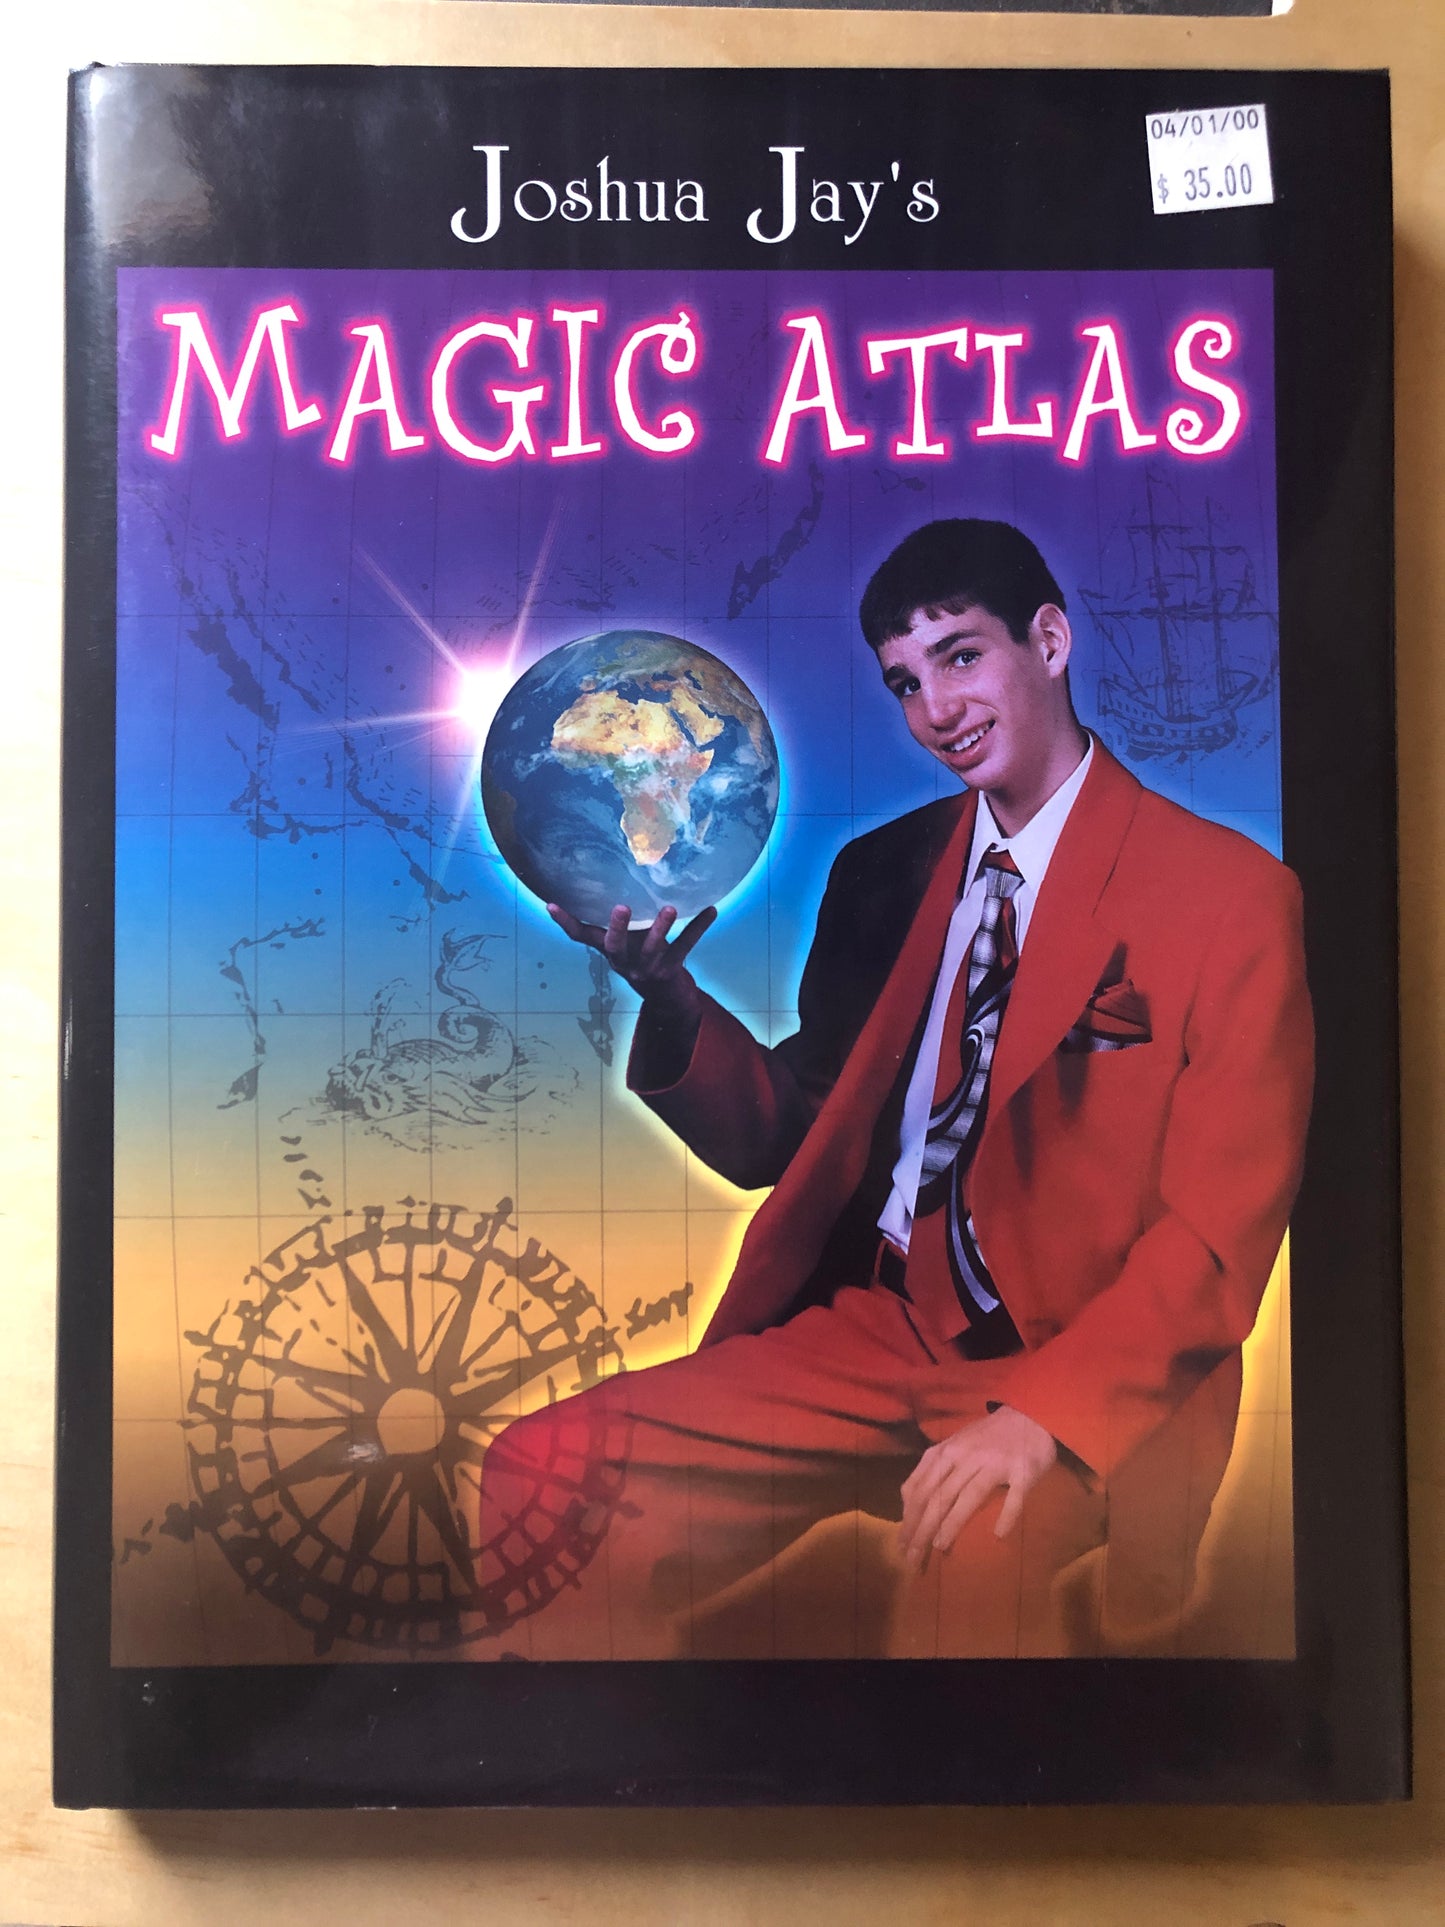 Joshua Jay's Magic Atlas